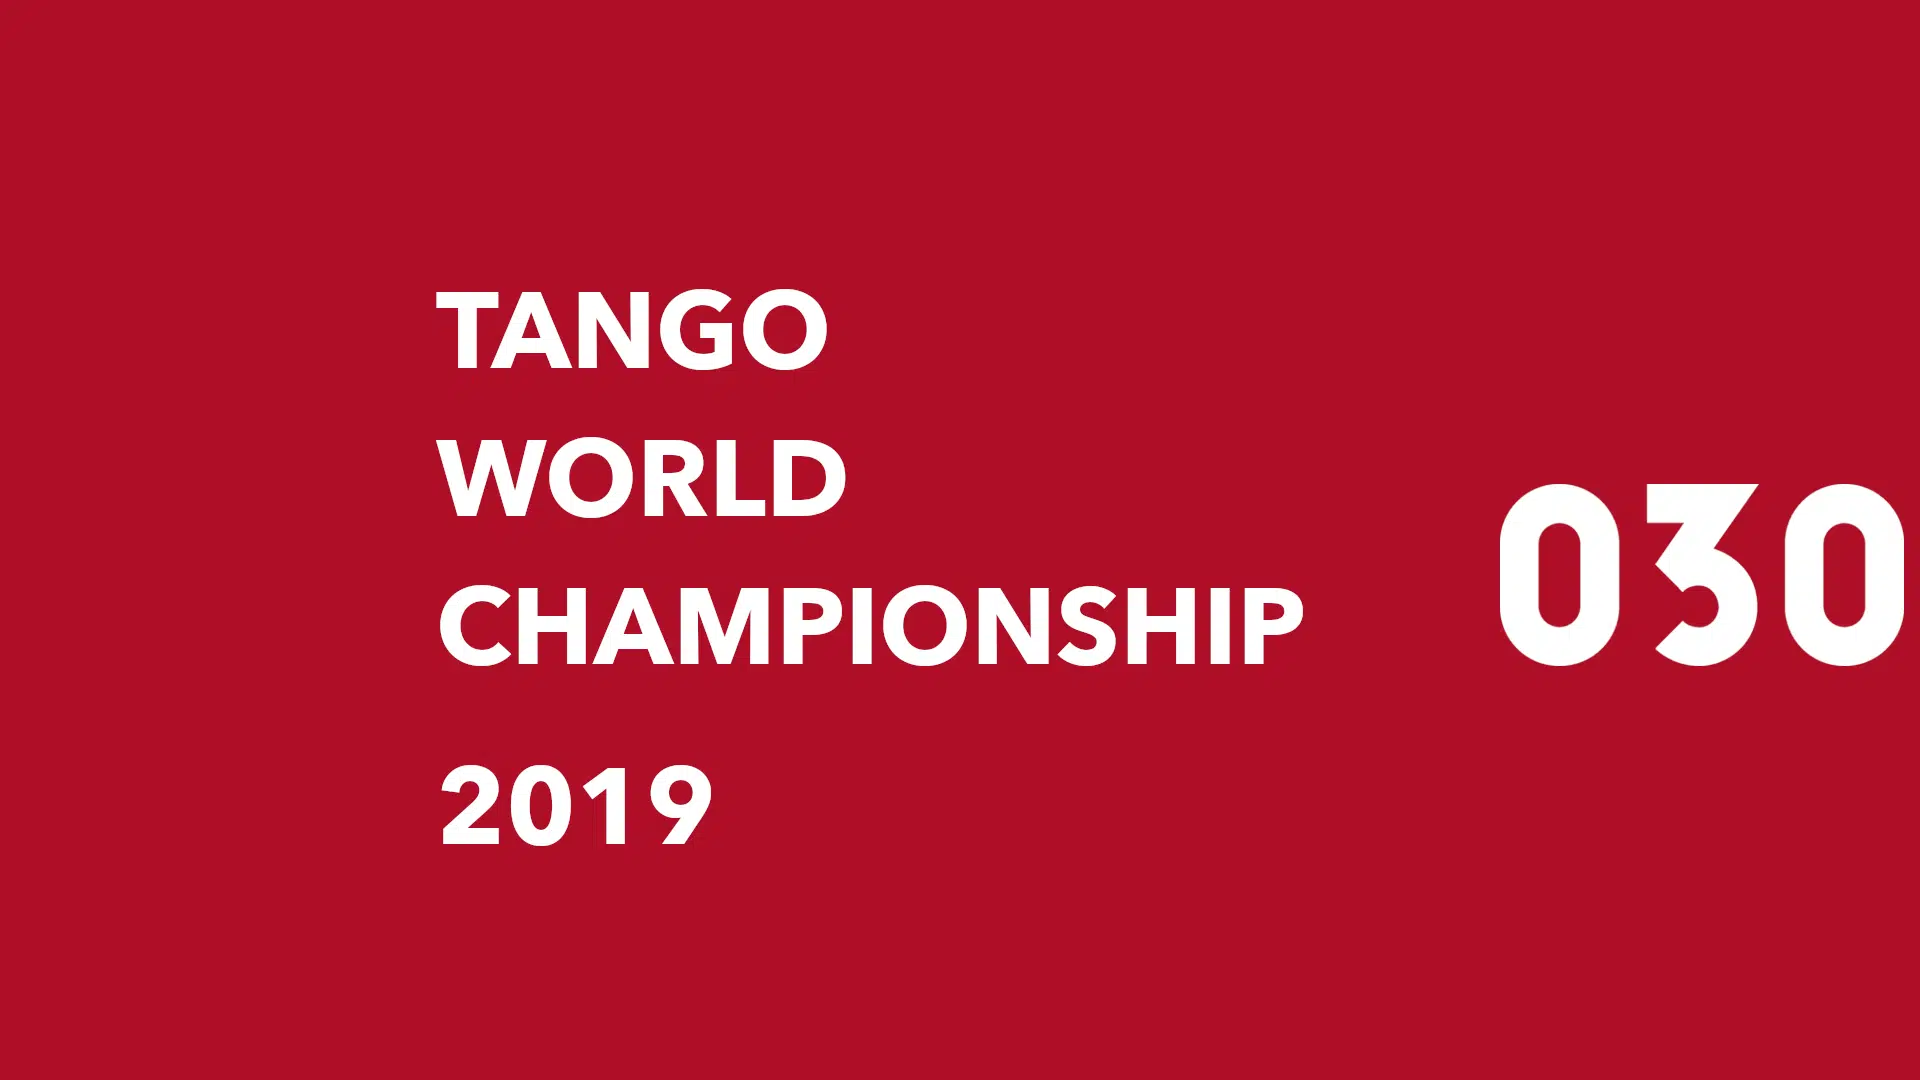 Tango World Championship 2019 Preview Image